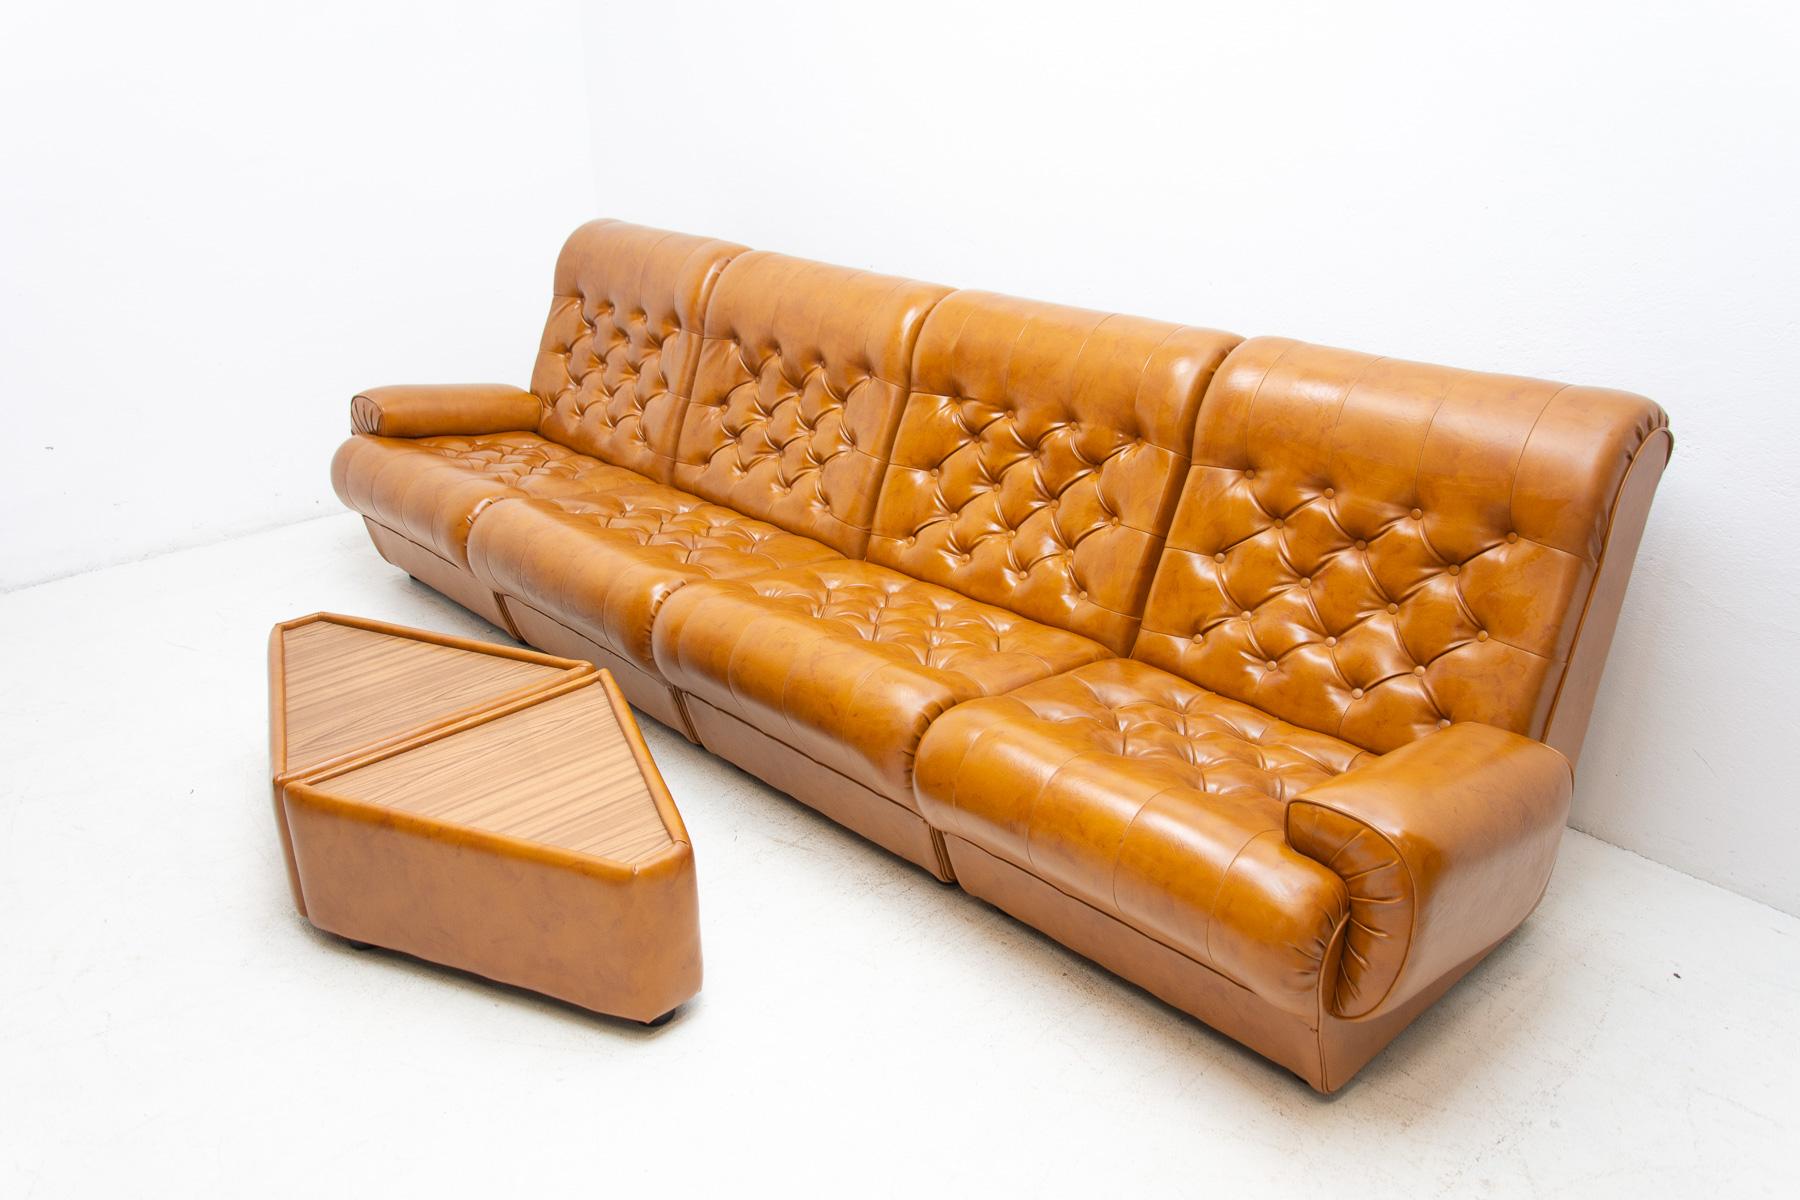 Mid-Century Modern Vintage Modular Leatherette Living Room Set, 1970´s For Sale